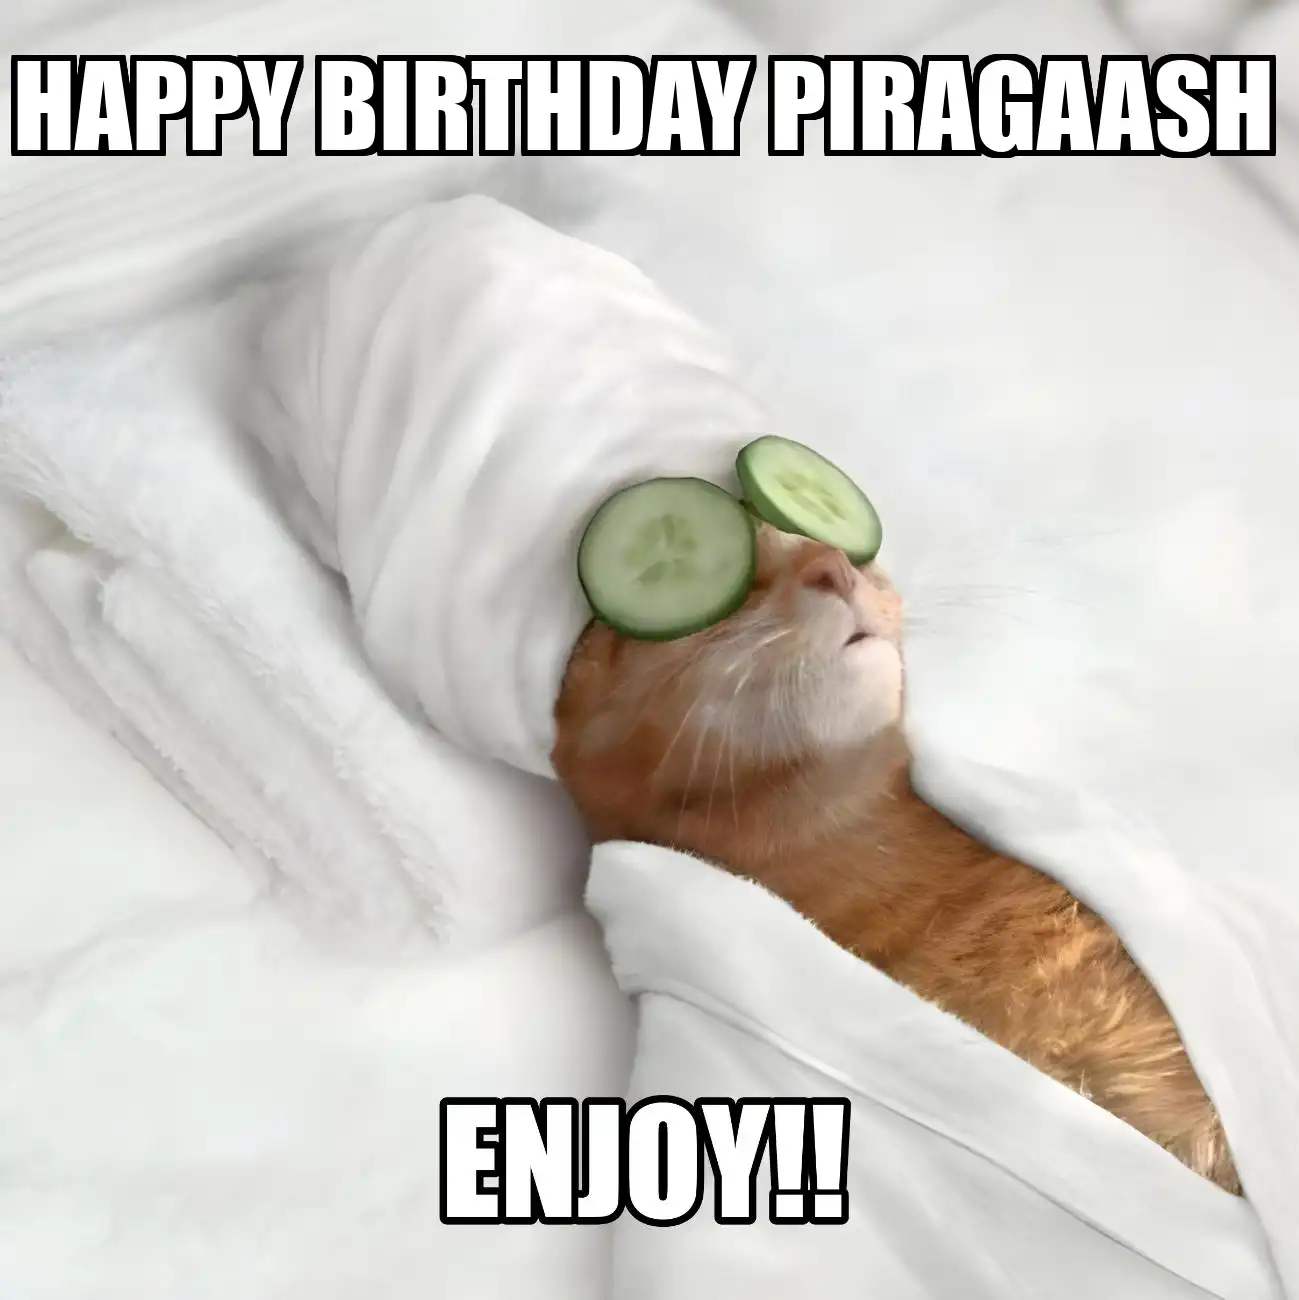 Happy Birthday Piragaash Enjoy Cat Meme